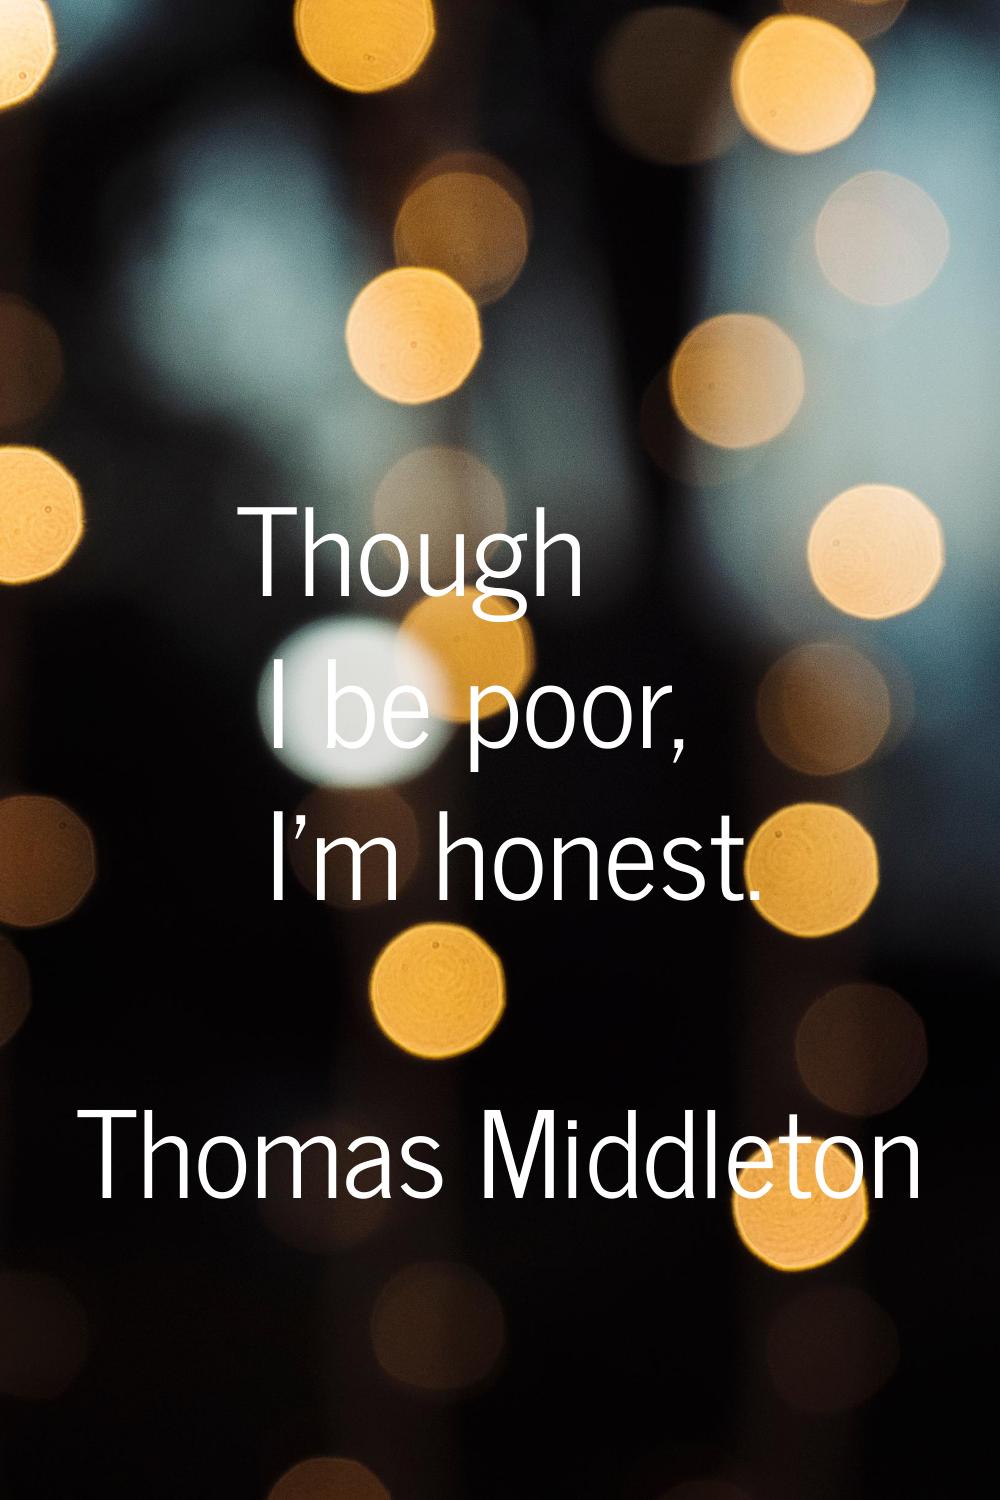 Though I be poor, I'm honest.